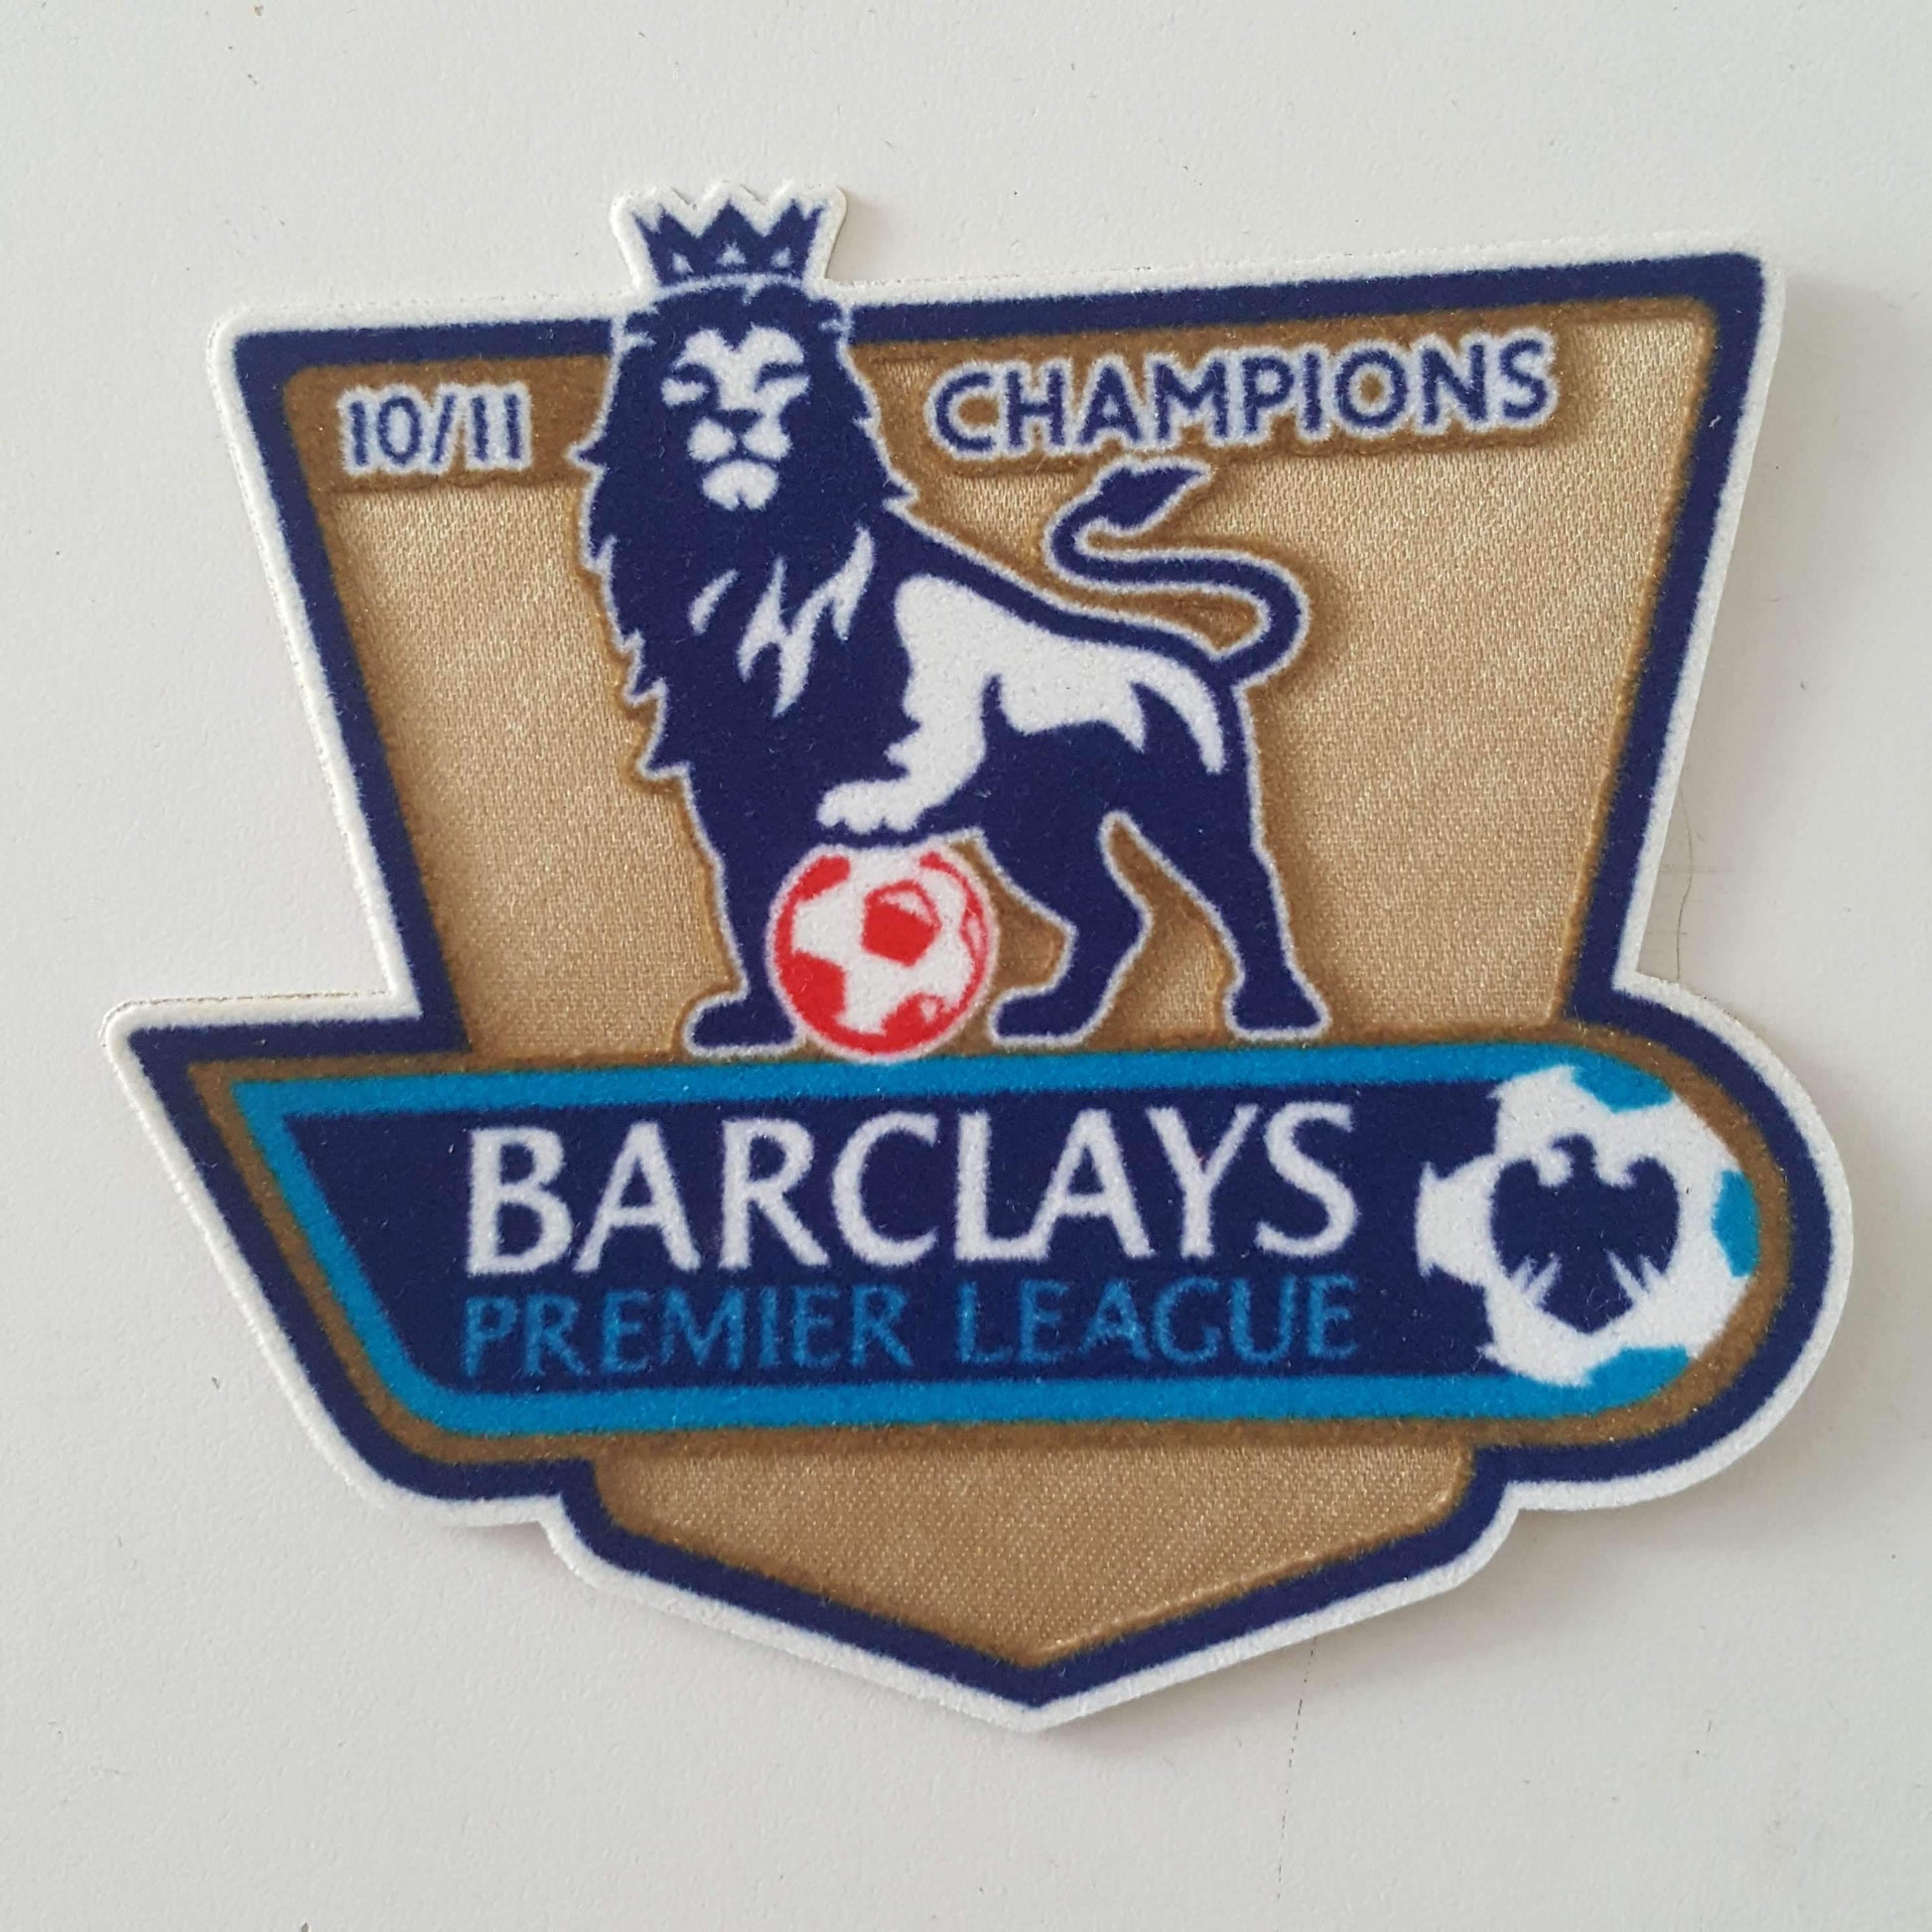 2010/11 Barclays Premier League Champions Patch - ClassicFootballJersey